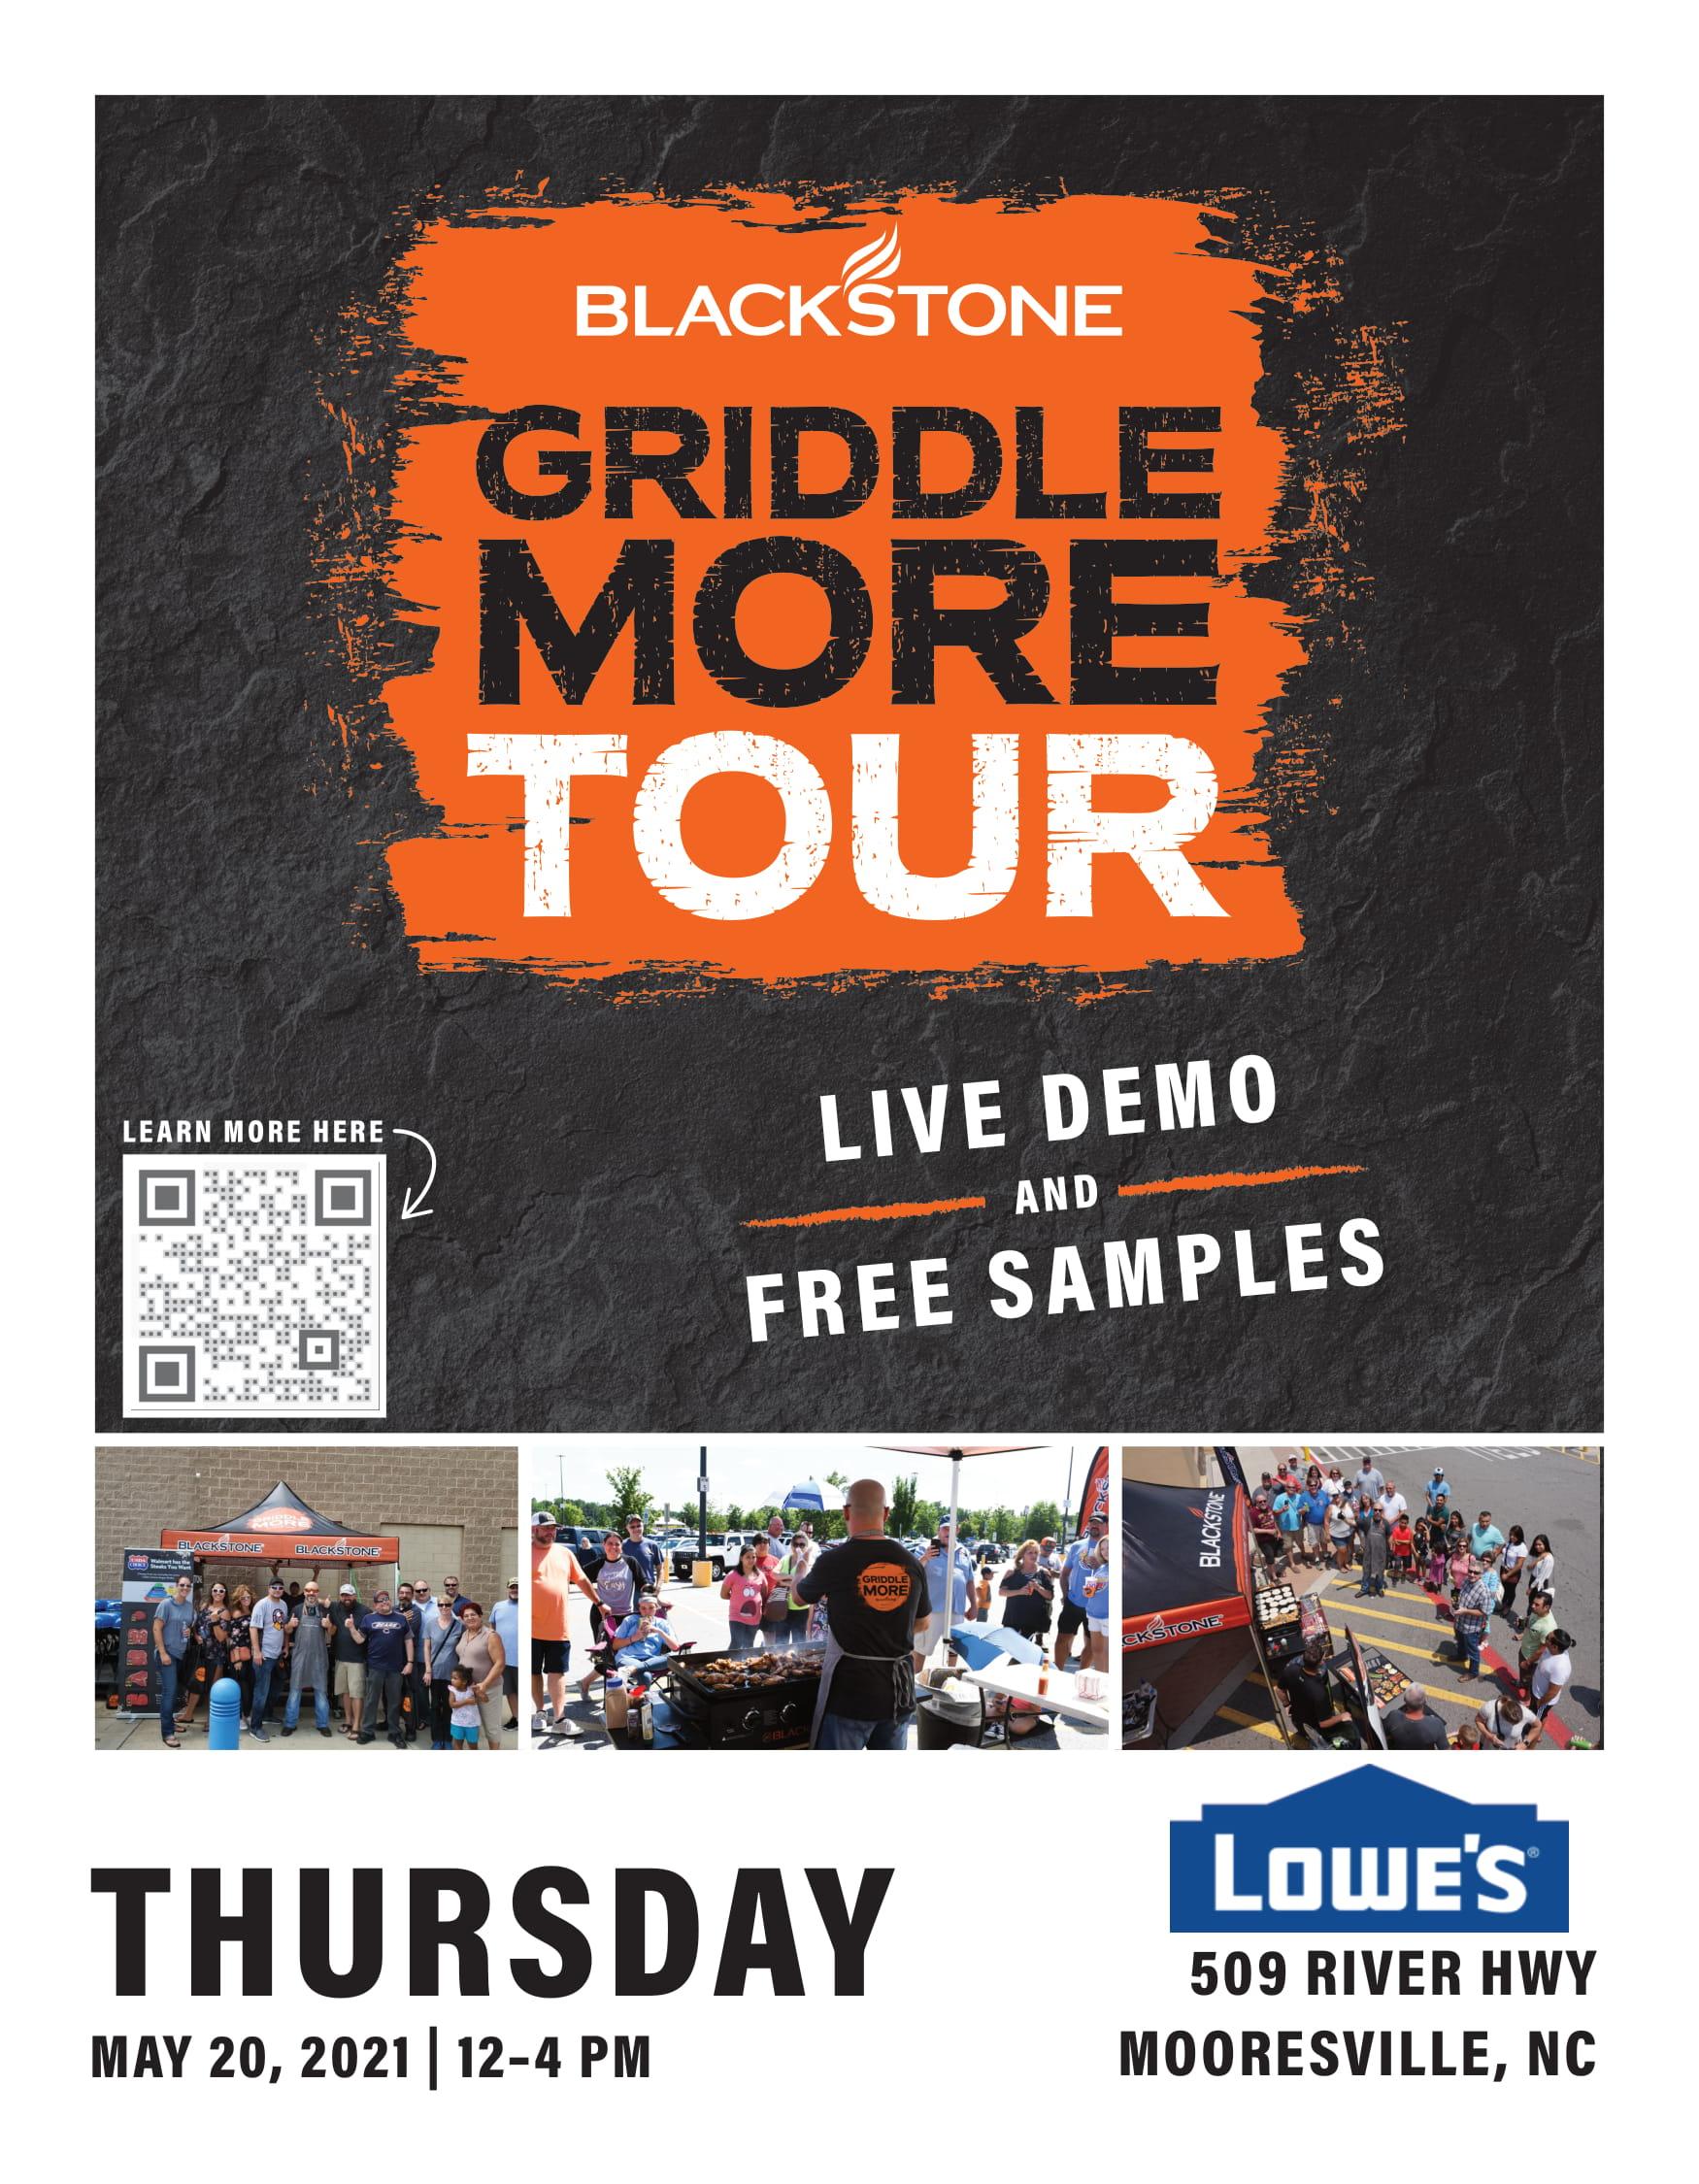 Blackstone Griddle More Tour 3 JUN 2021